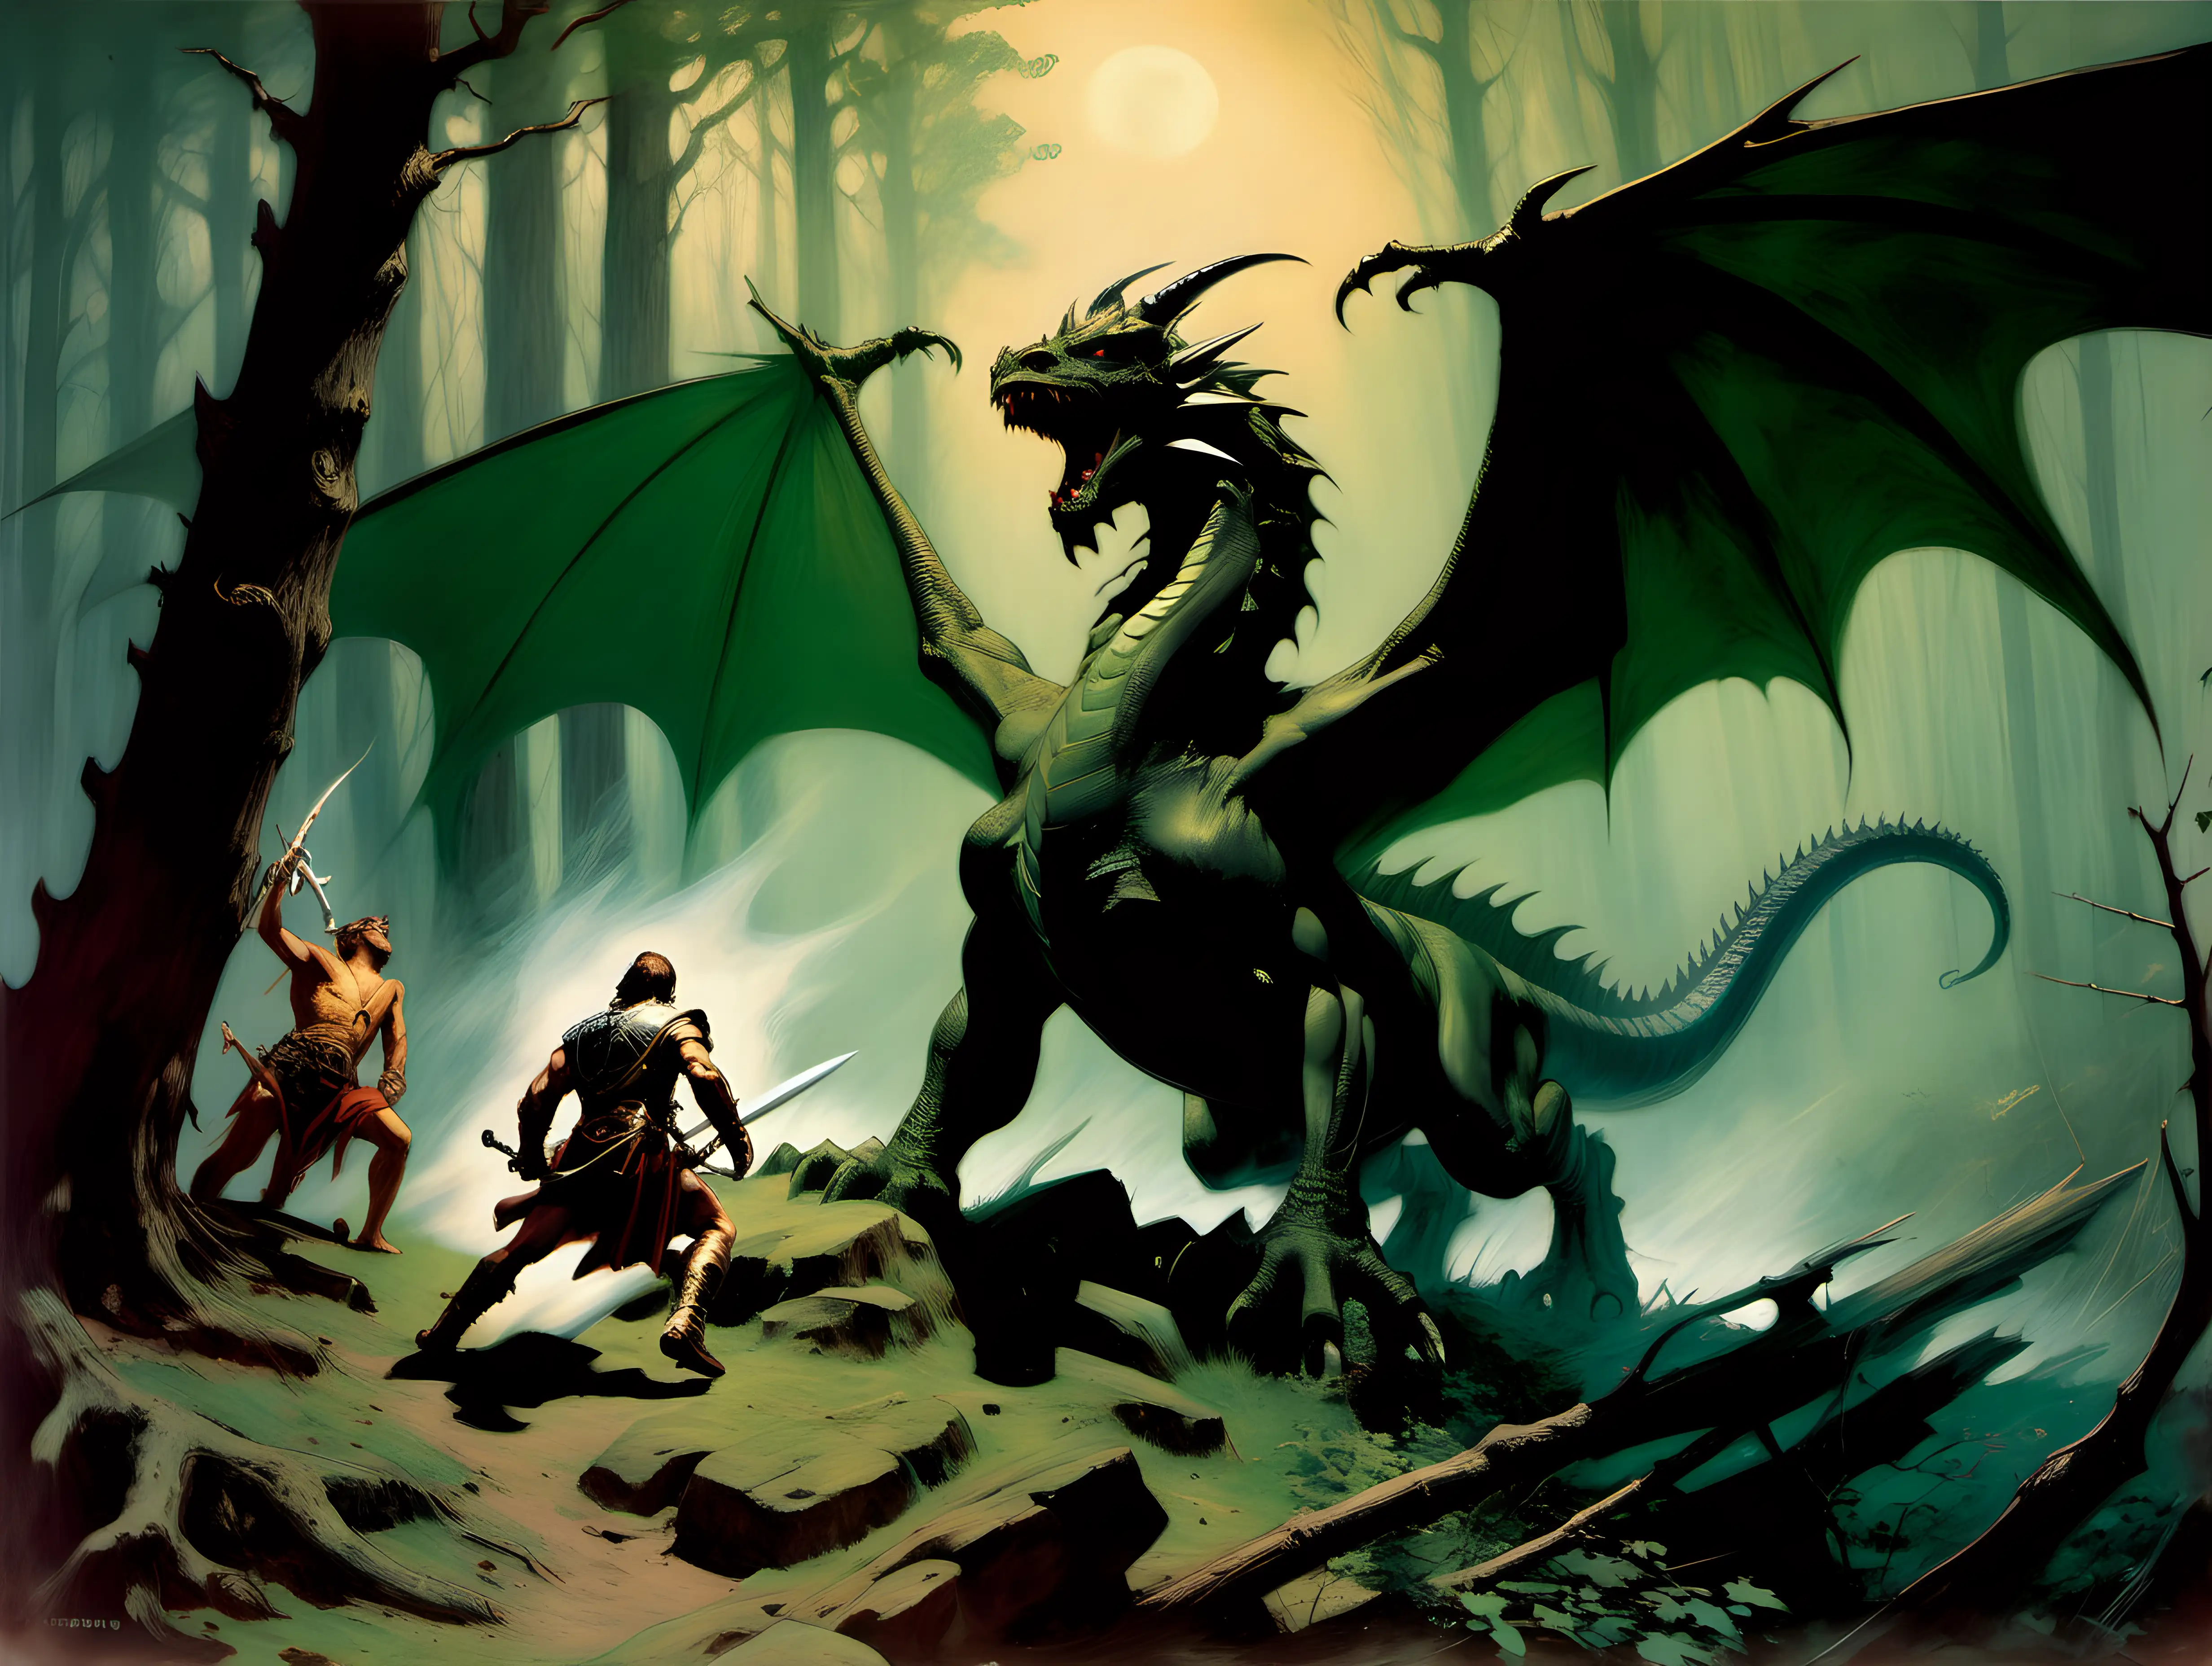 King Arthur Battling a Fierce Dragon in Sherwood Forest Epic Fantasy Art